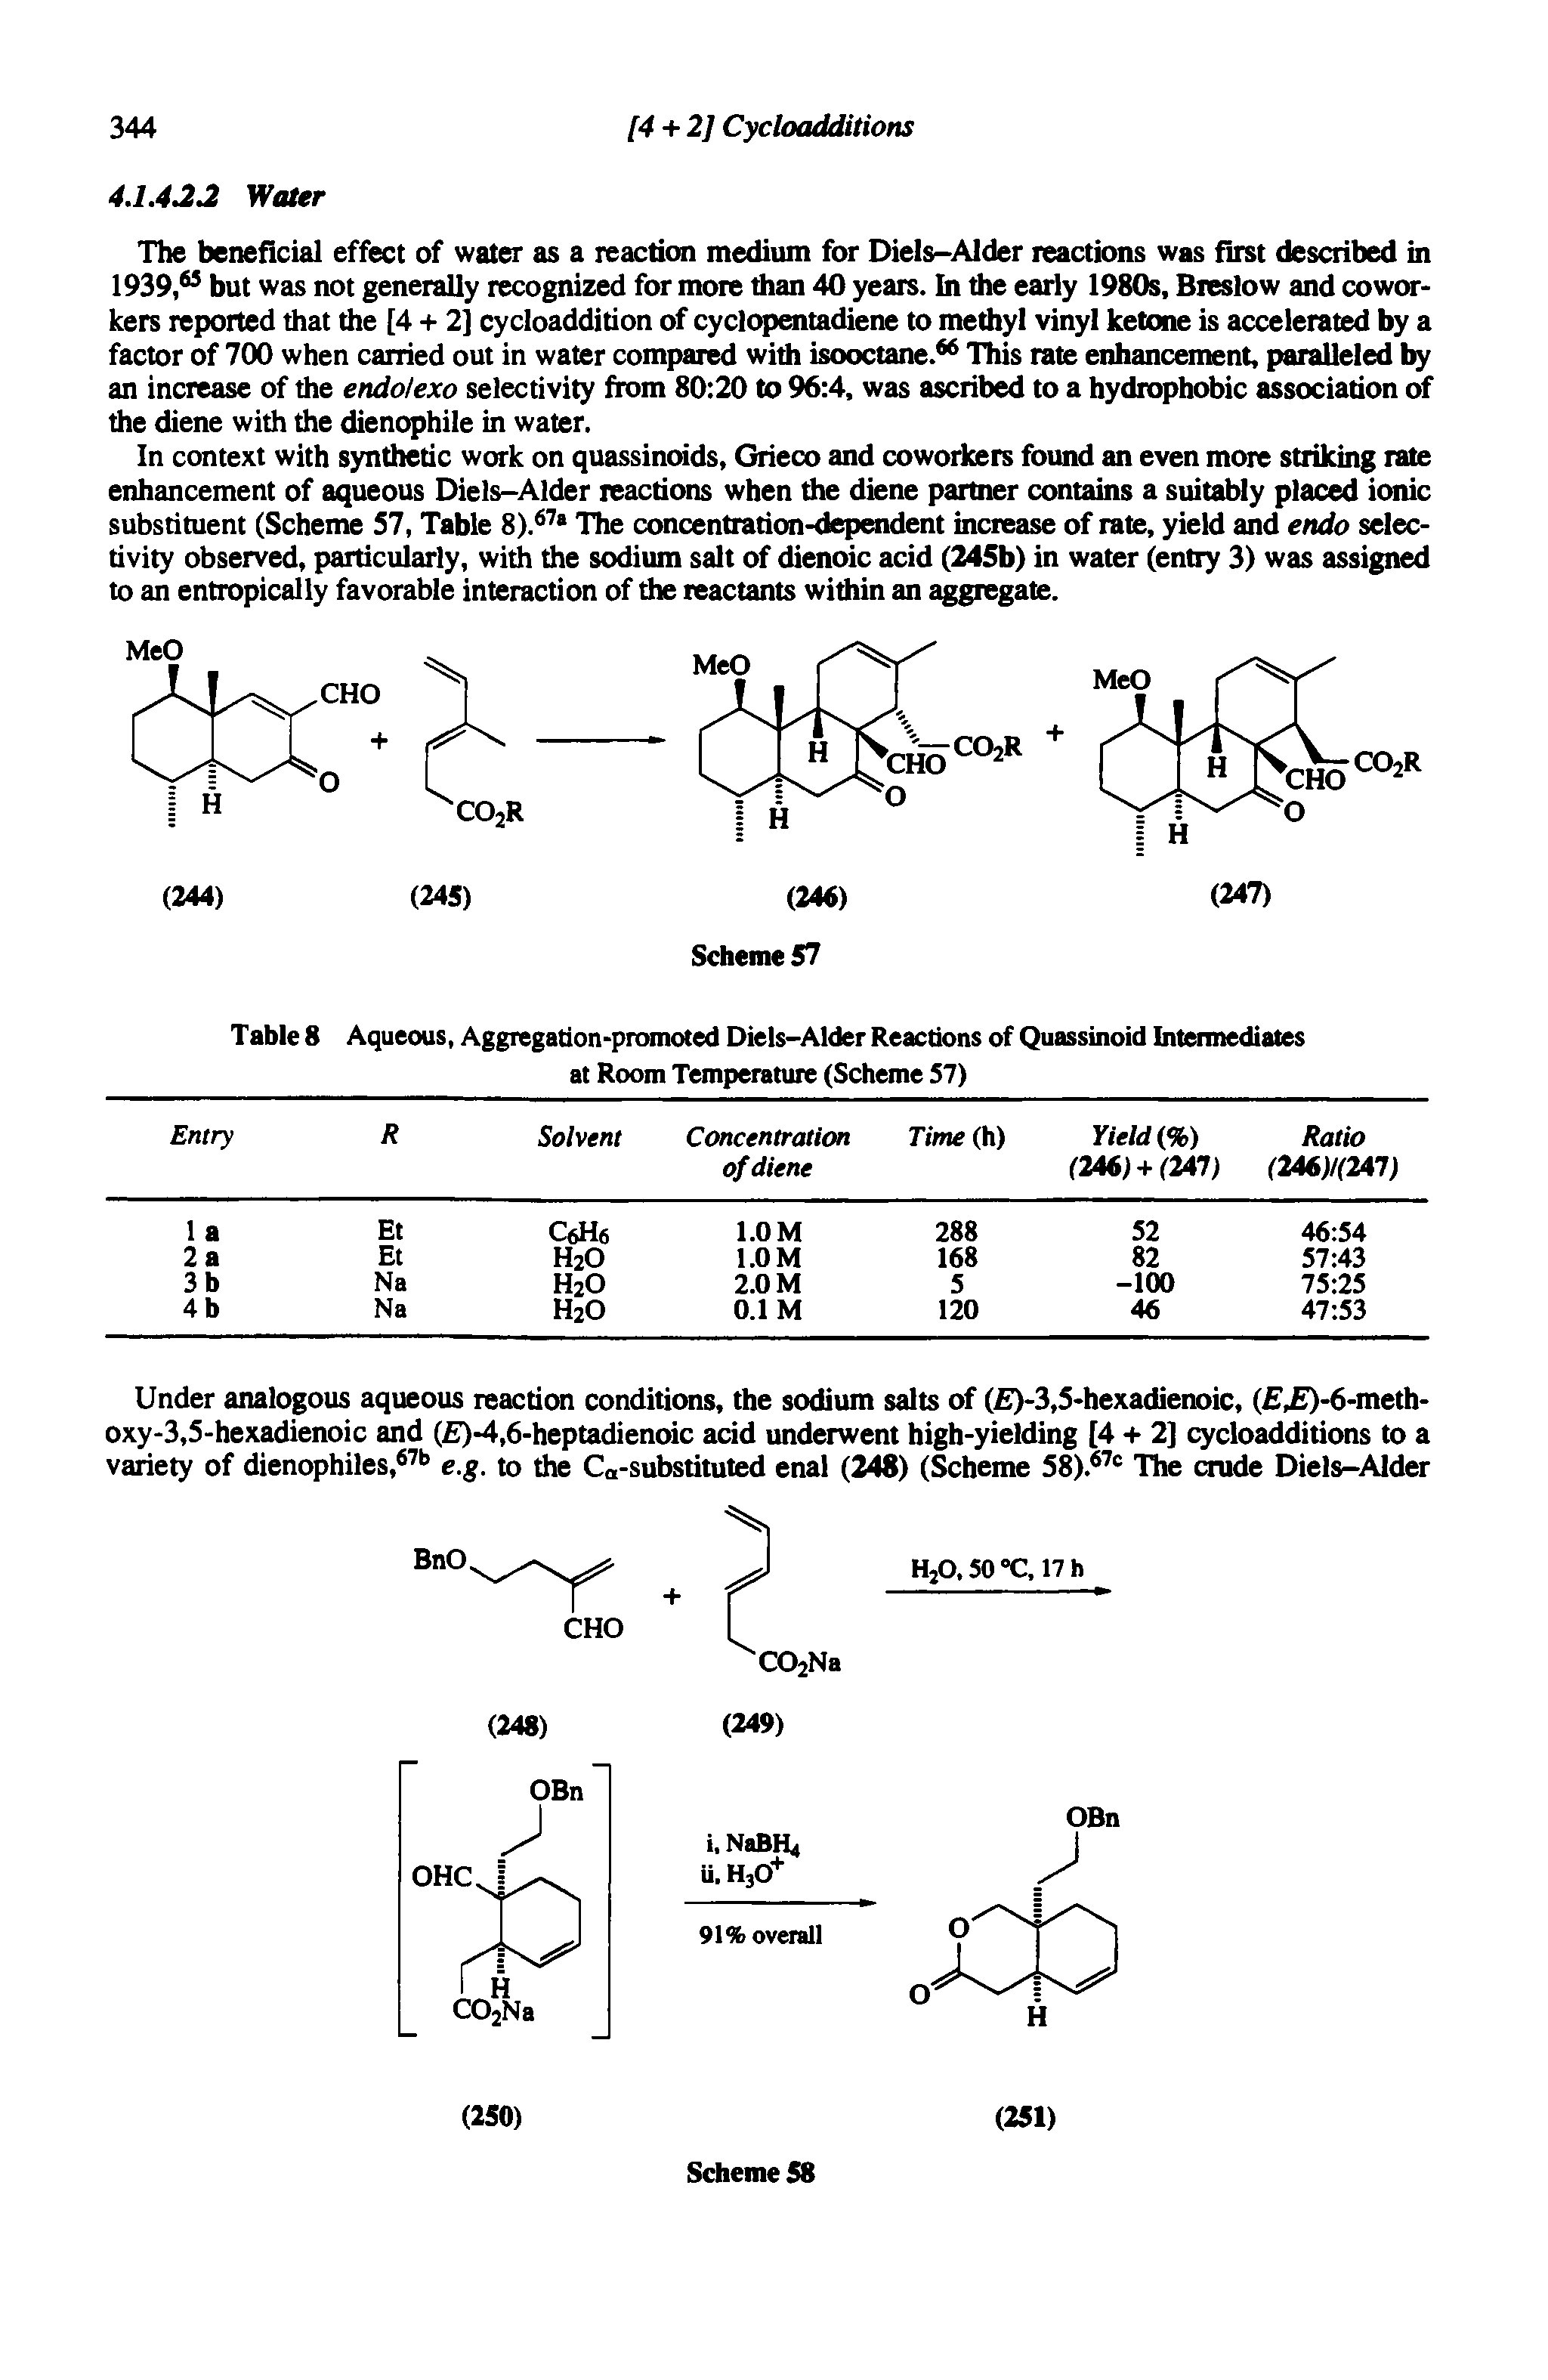 Table 8 Aqueous, Aggregation-promoted Diels-Alder Reactions of Quassinoid Intermediates at Room Temperature (Scheme 57)...